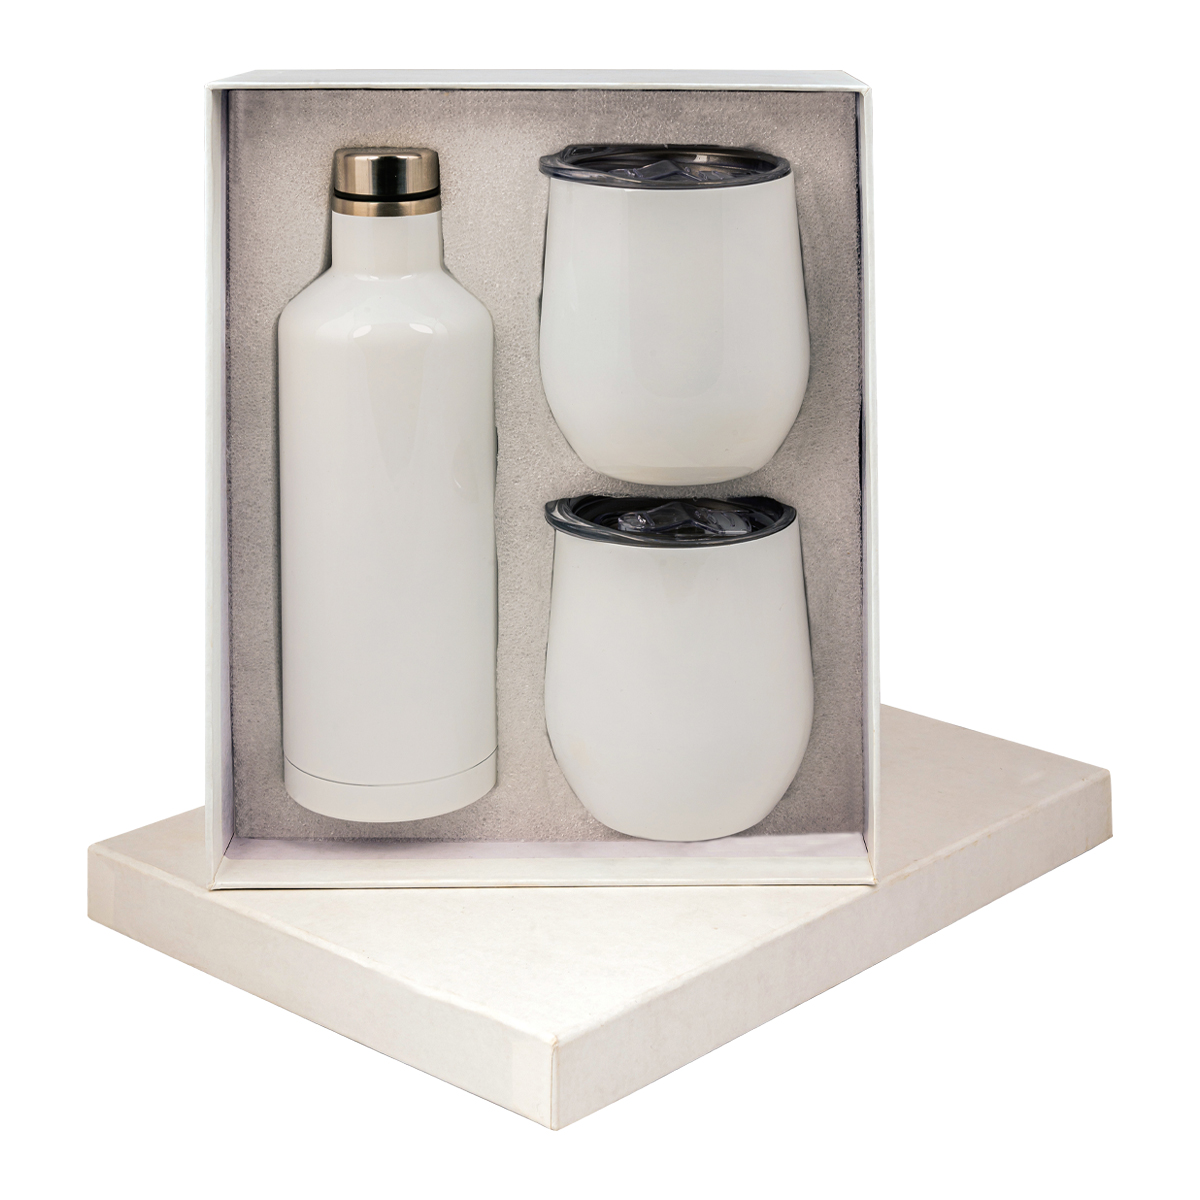 Manhattan Flask & x2 Mug Gift Set Product Image